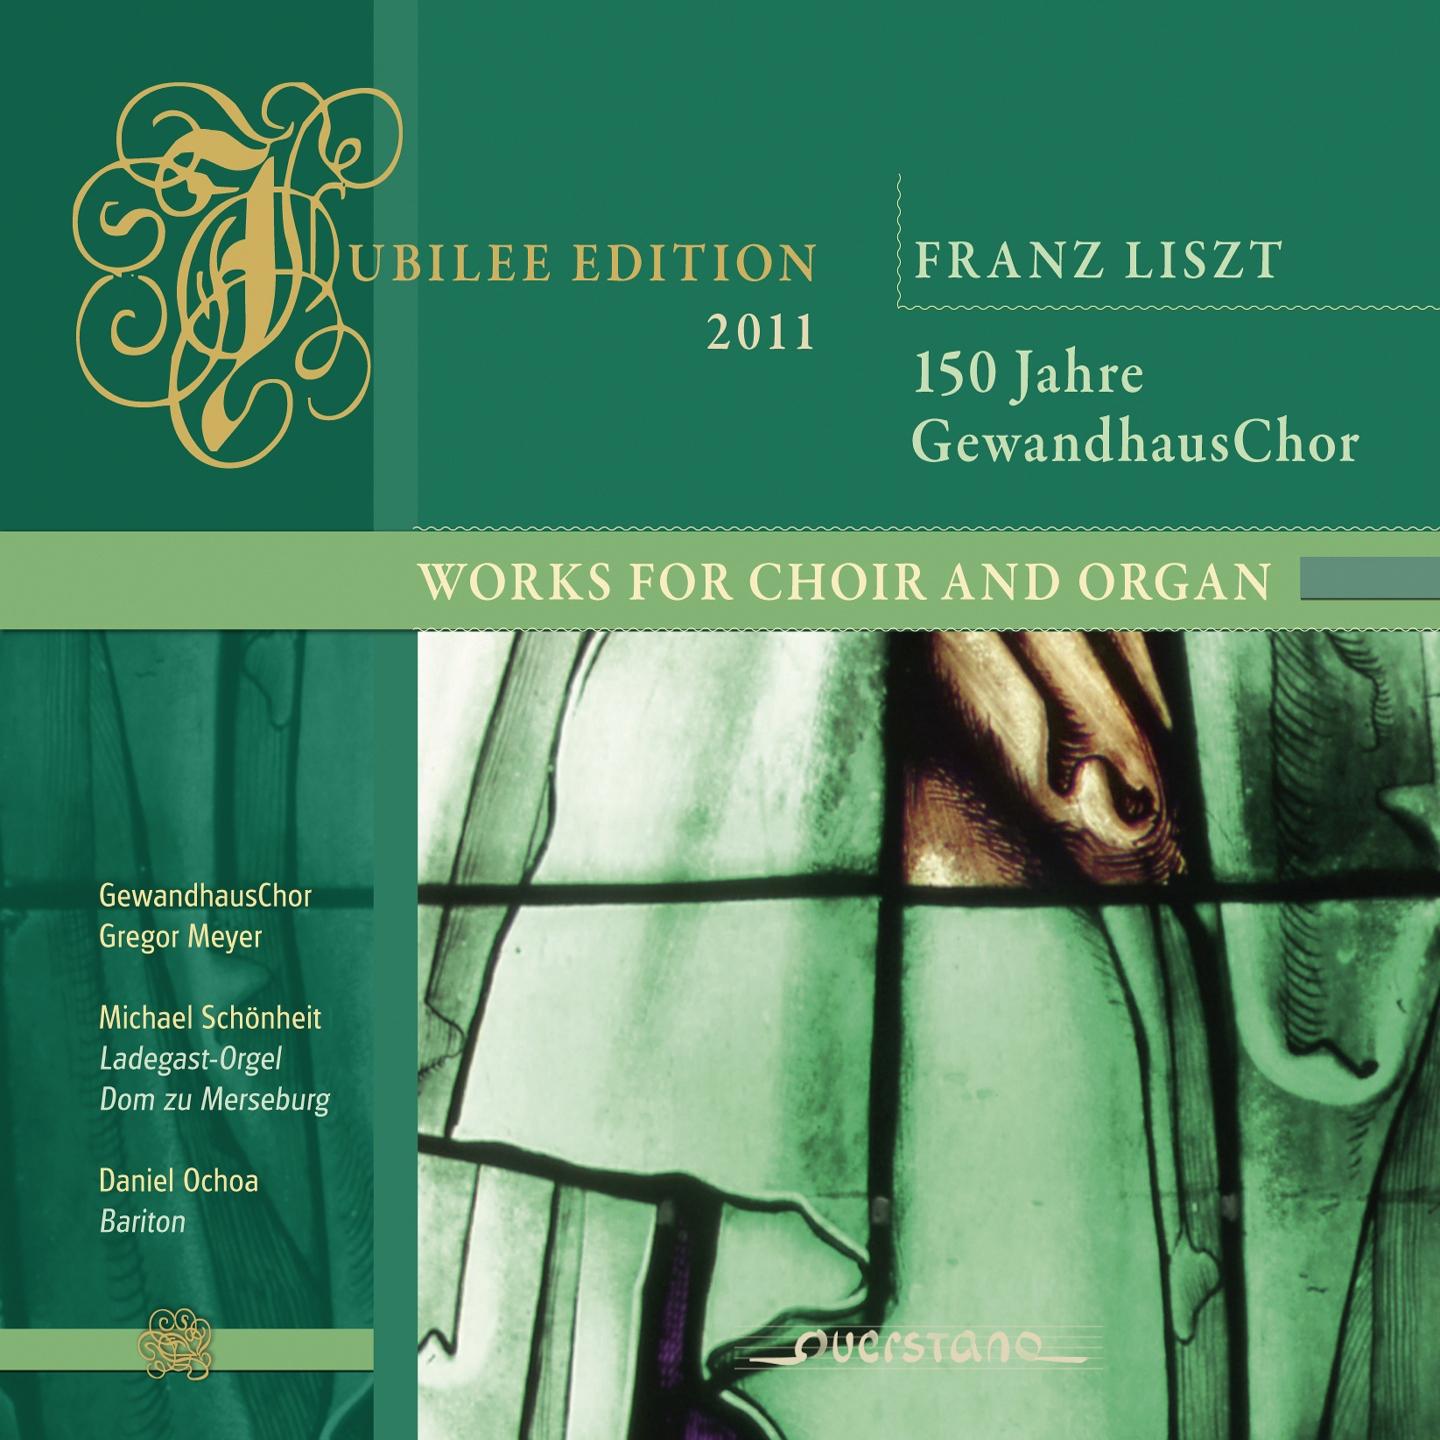 Постер альбома Jubilee Edition 2011 Franz Liszt